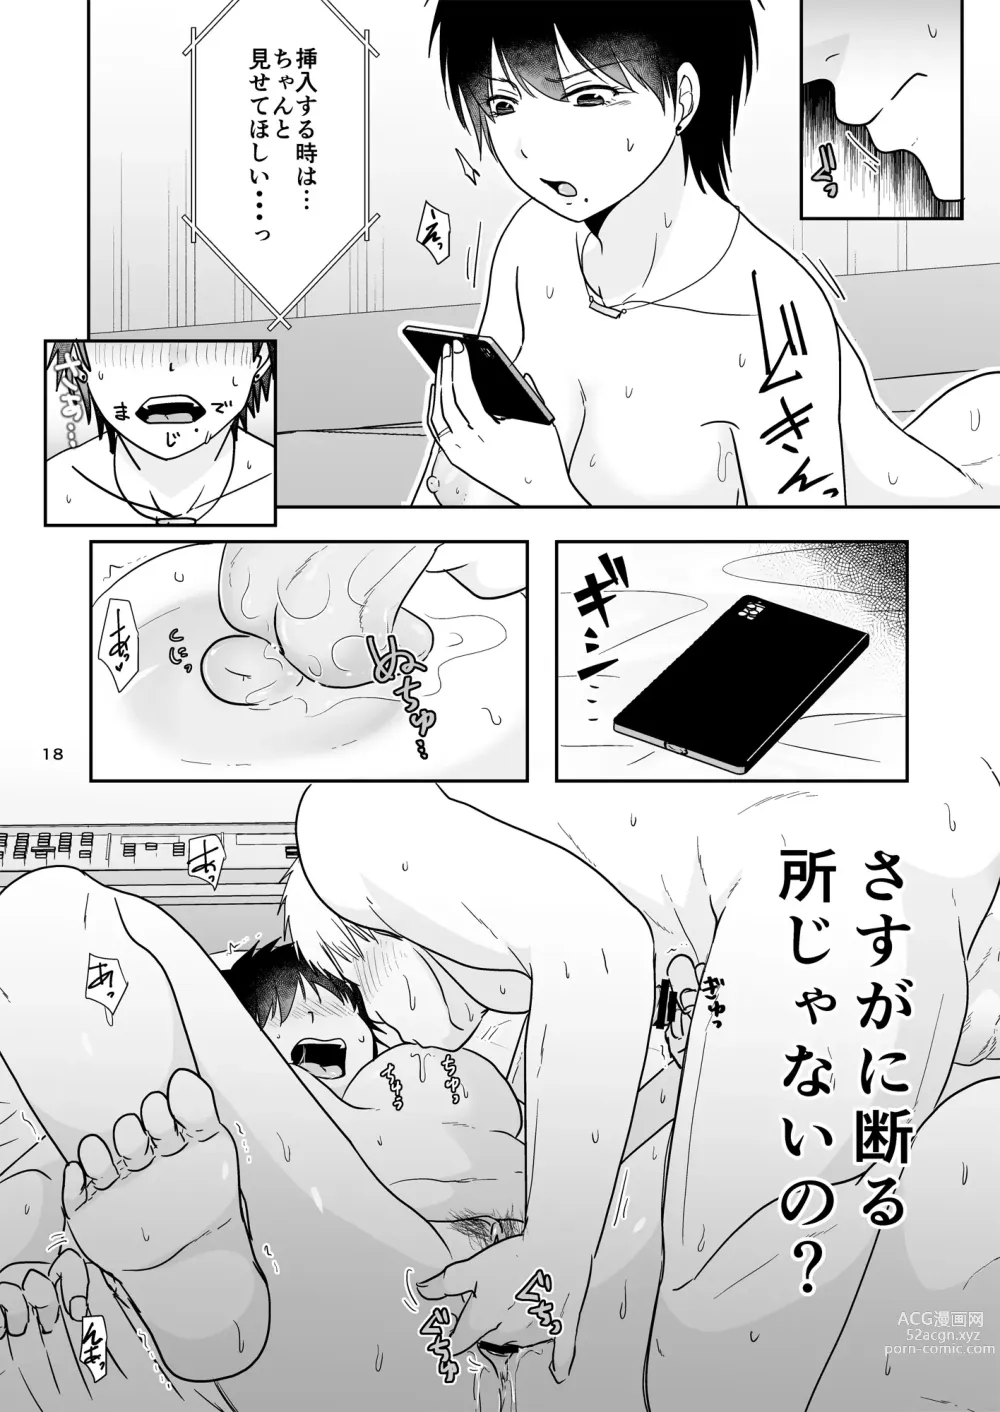 Page 17 of doujinshi Netorase ga atari bakka na wake nai ja nai